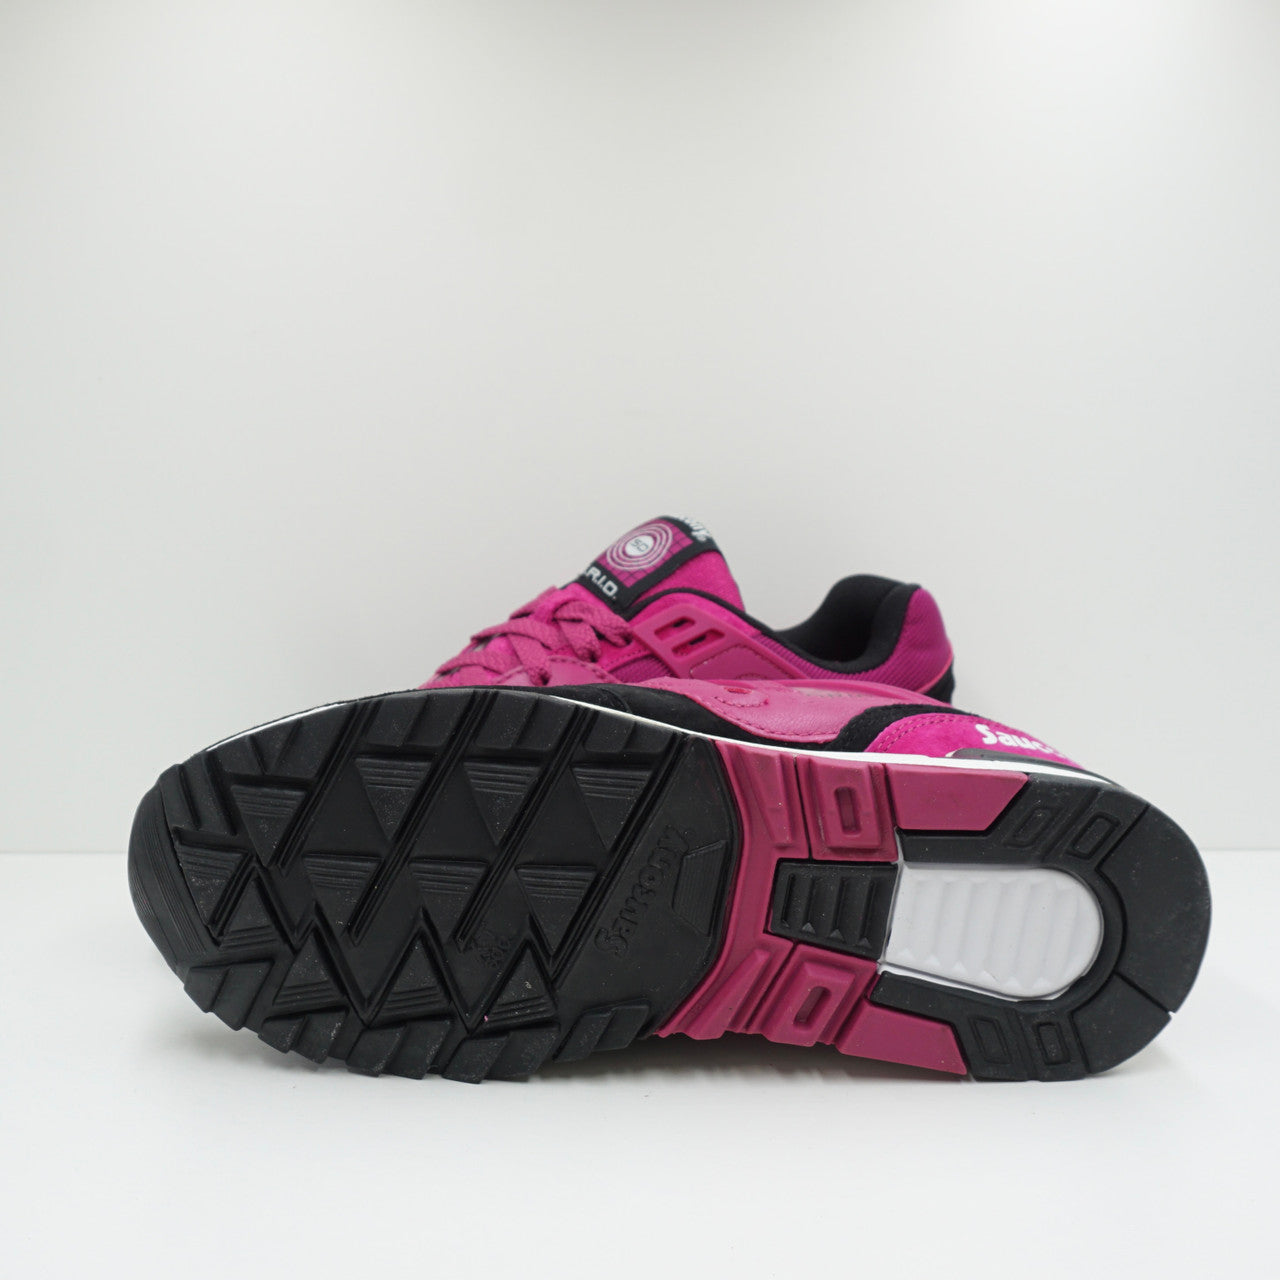 Saucony Grid Sd Premium Shoes Berry/Black Sample